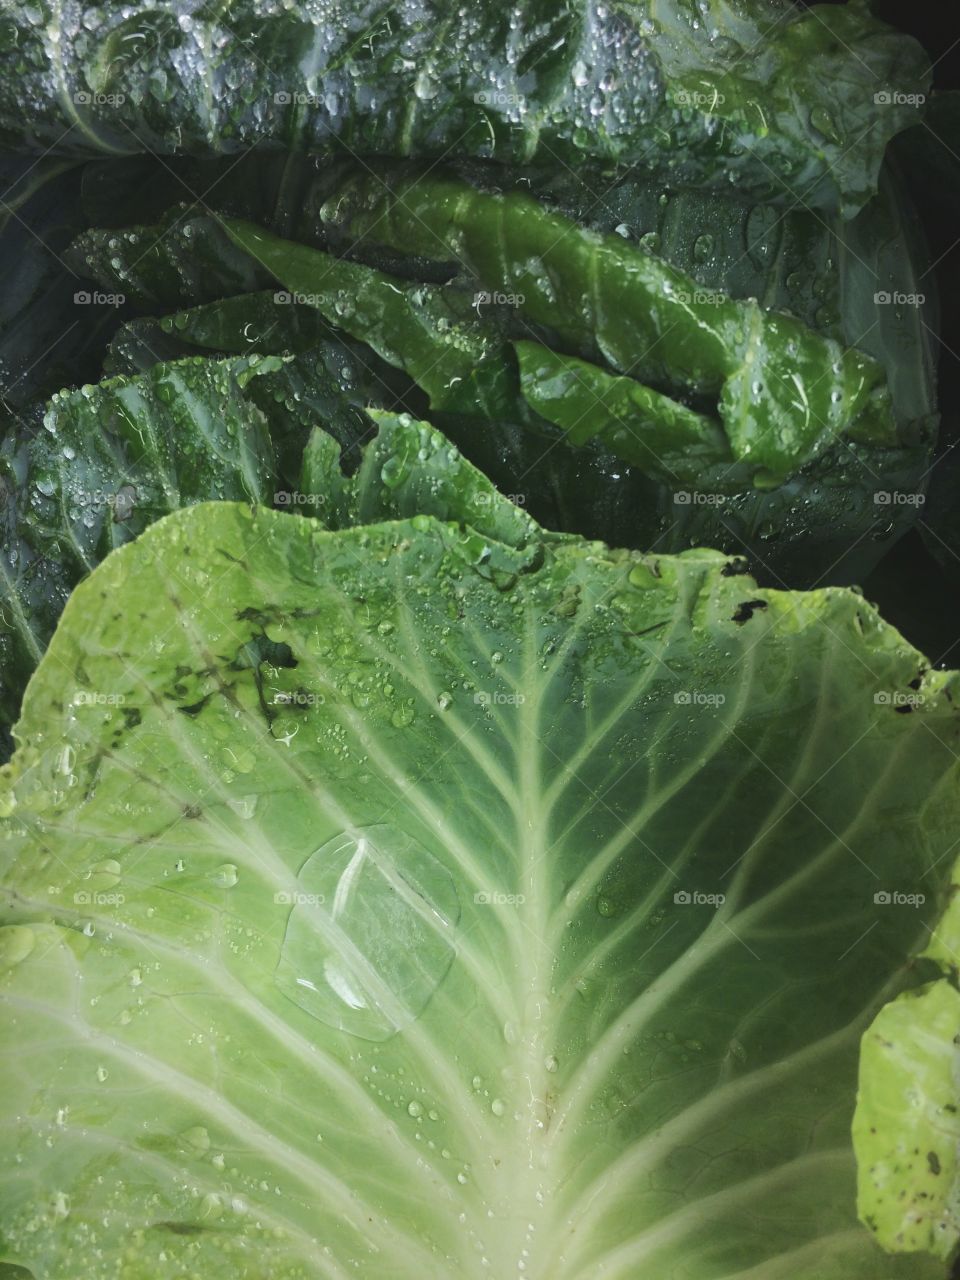 Cabbage. 